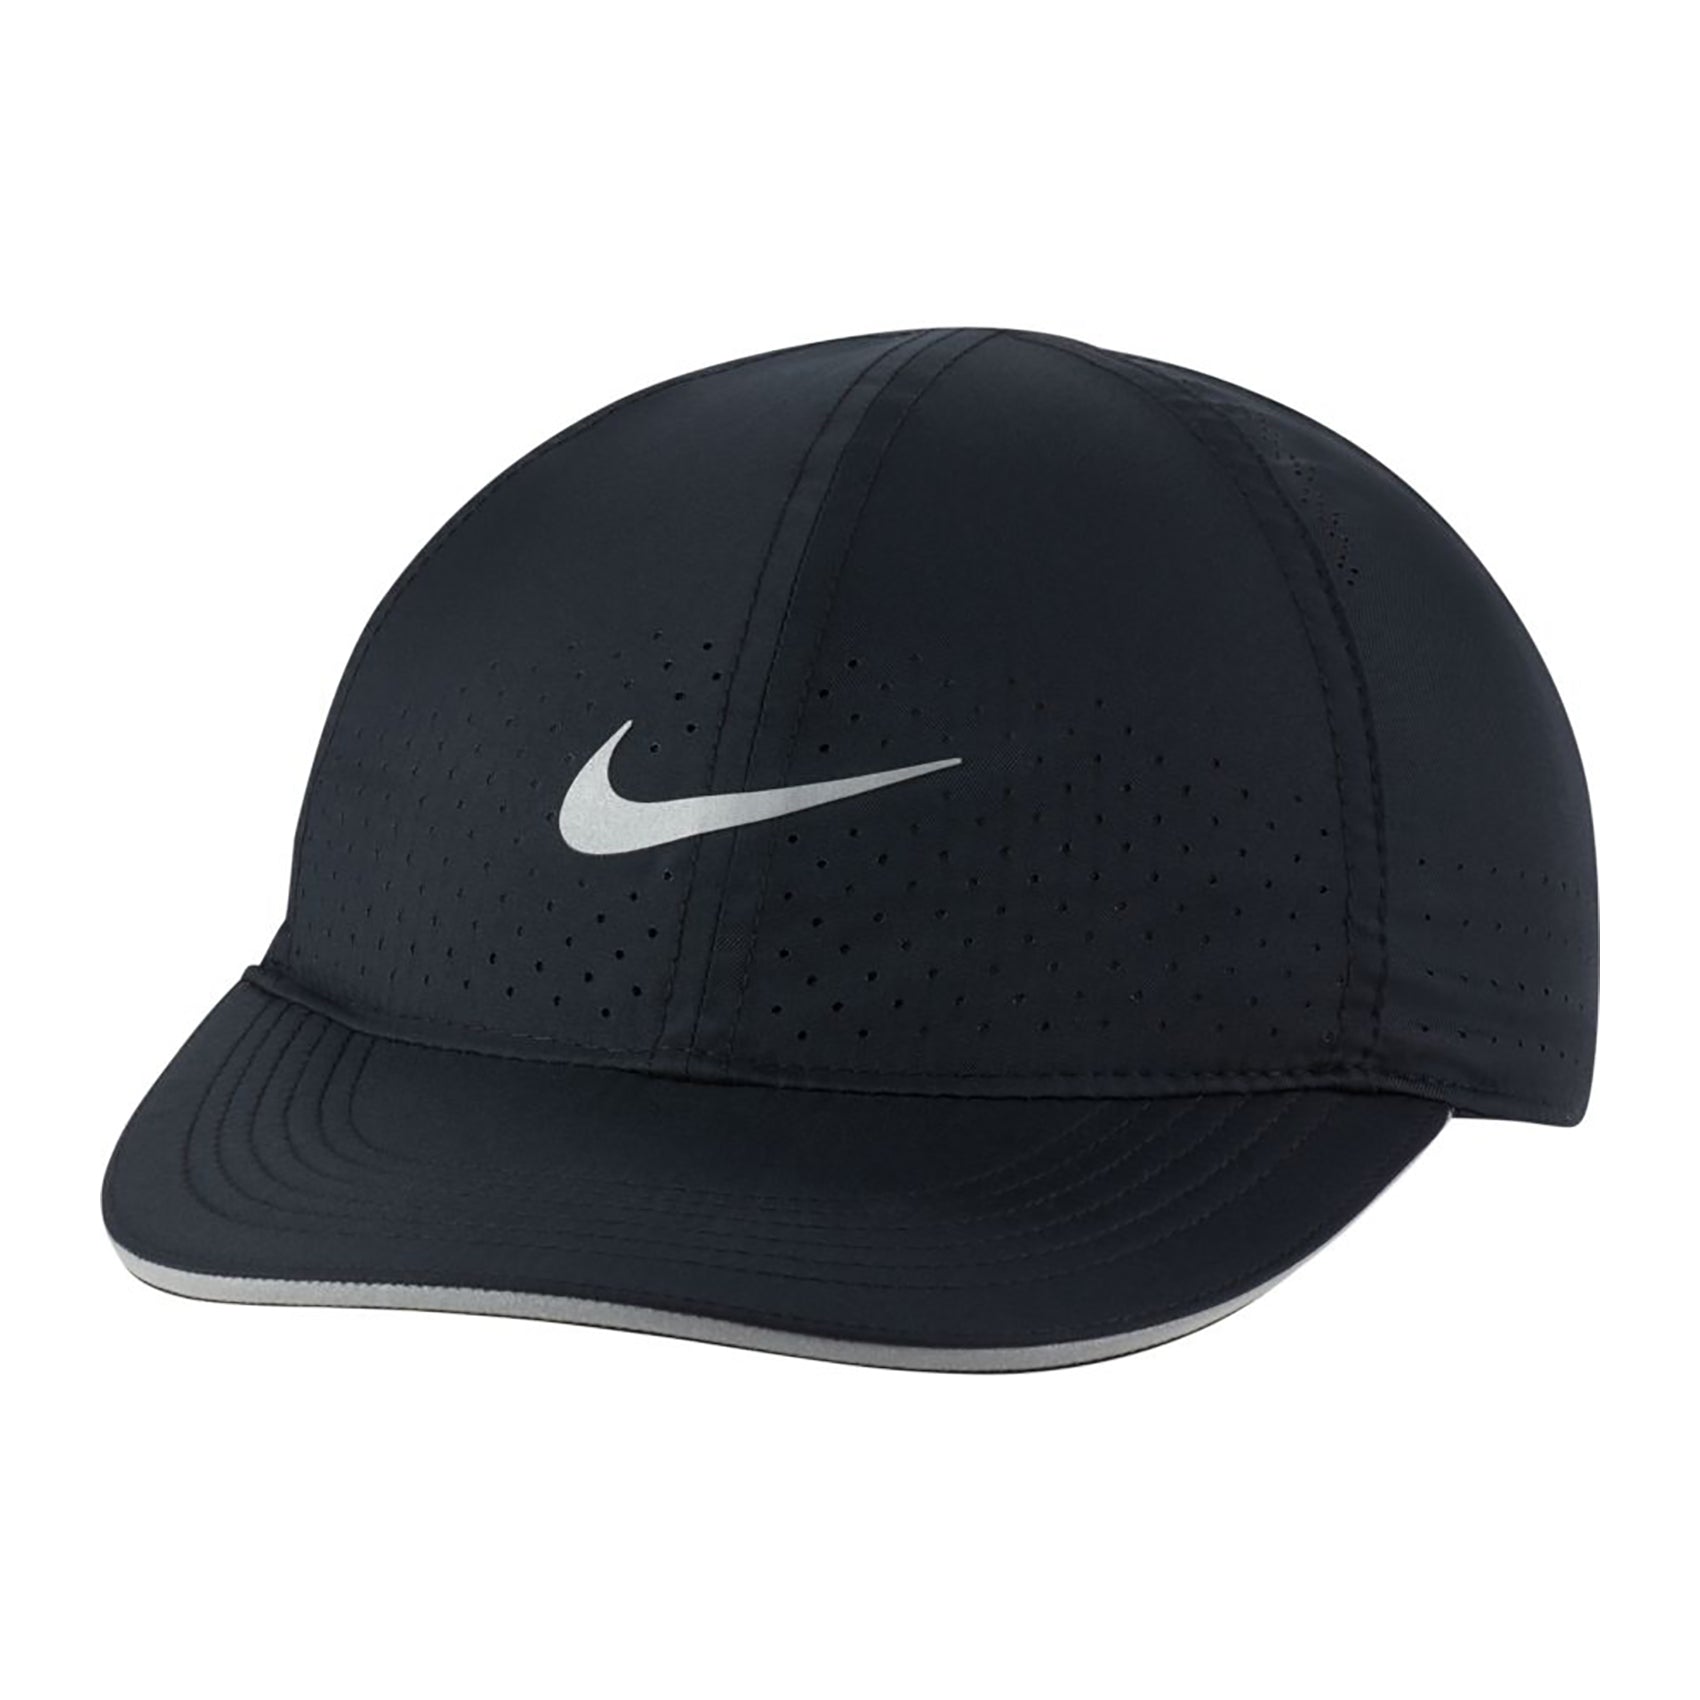 Nike Women's Featherlight Cap, Black